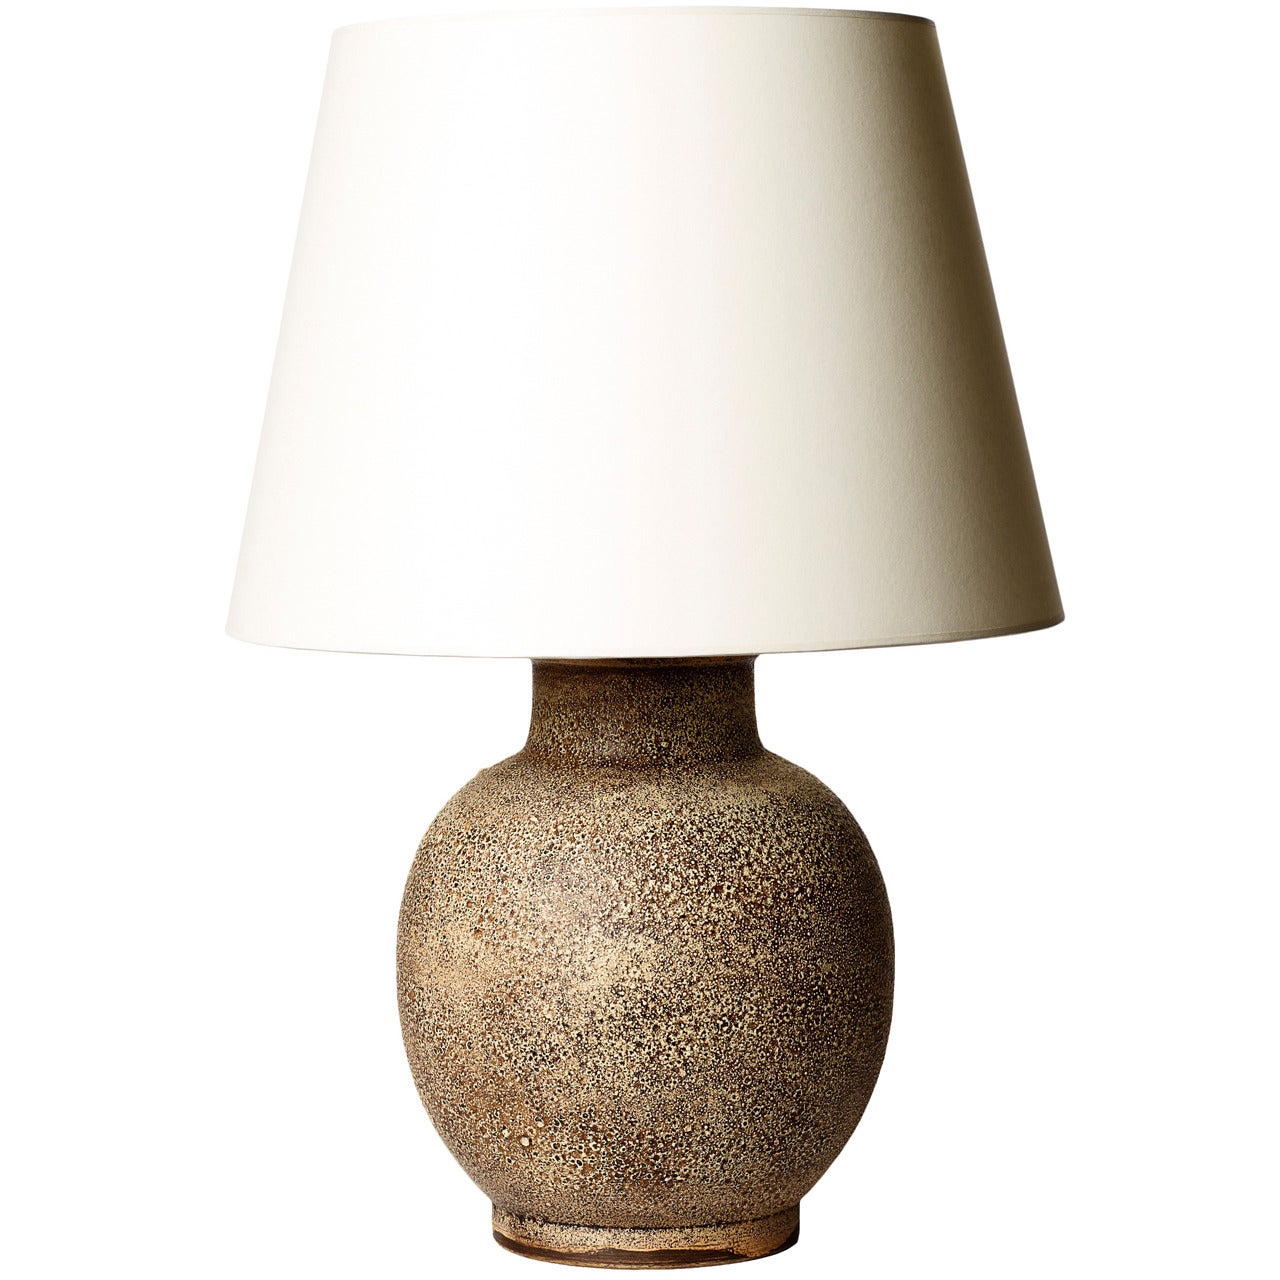 Table lamp in ceramic with "lunar terrain" texture by Keramos